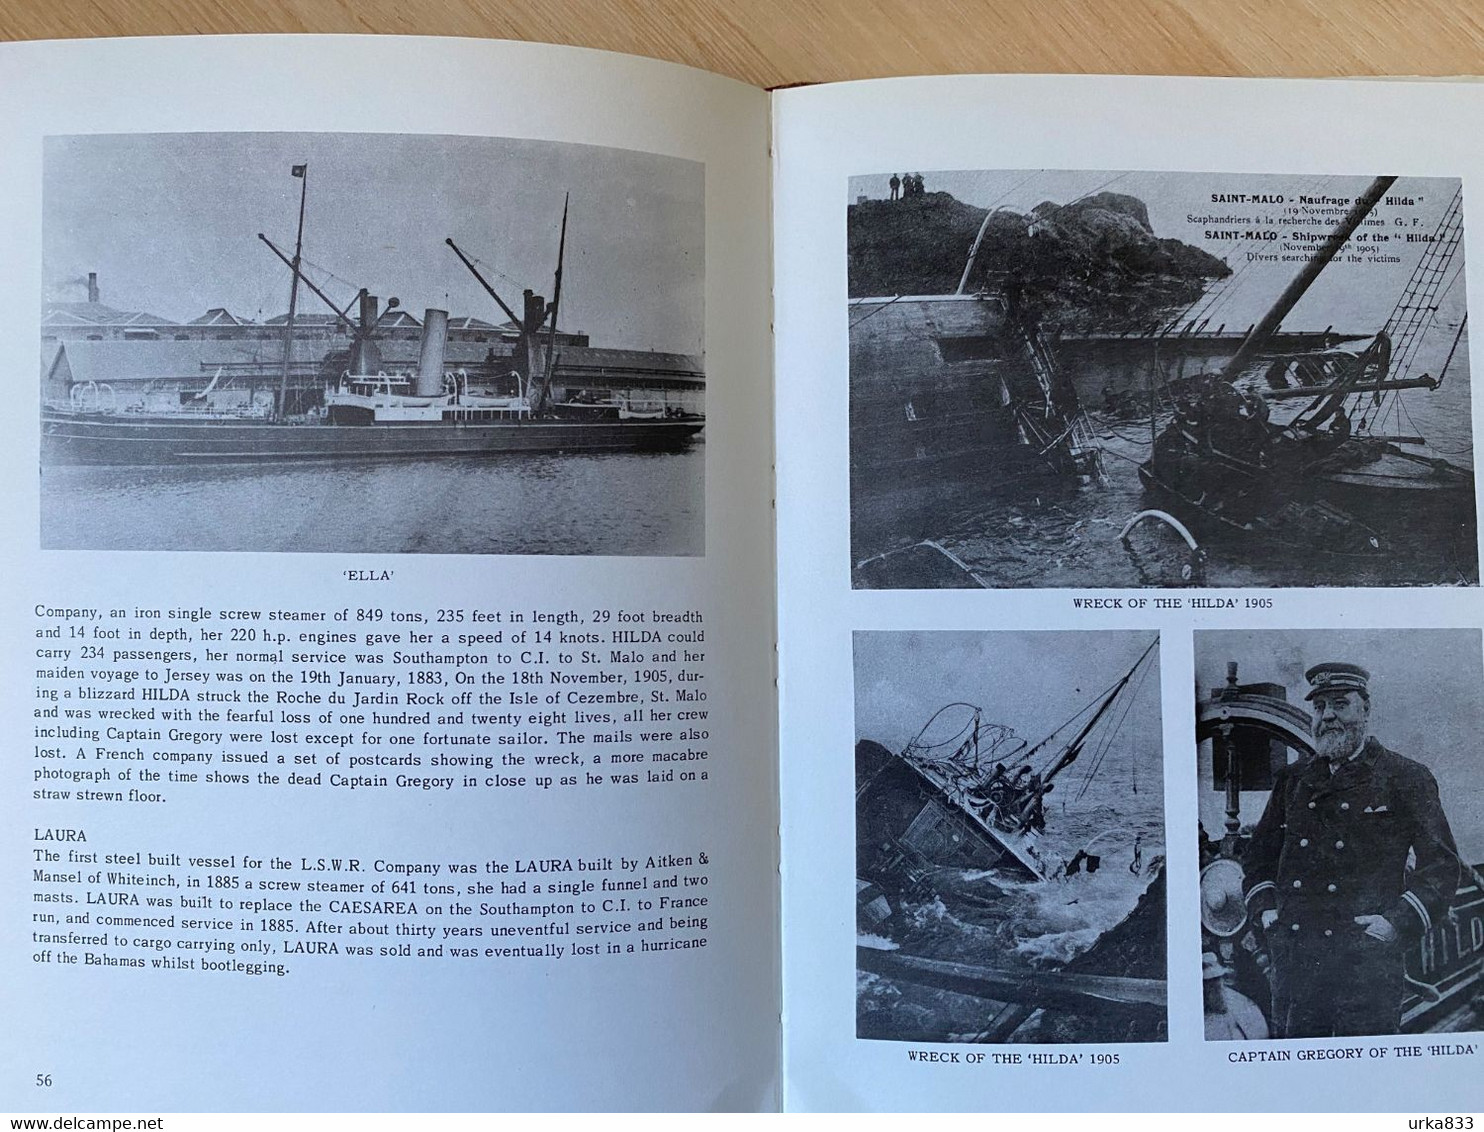 Rare Livre Mail Ships Of The Channel Islands De Richard Mayne Histoire Postale Maritime île Anglo-normandes - Seepost & Postgeschichte